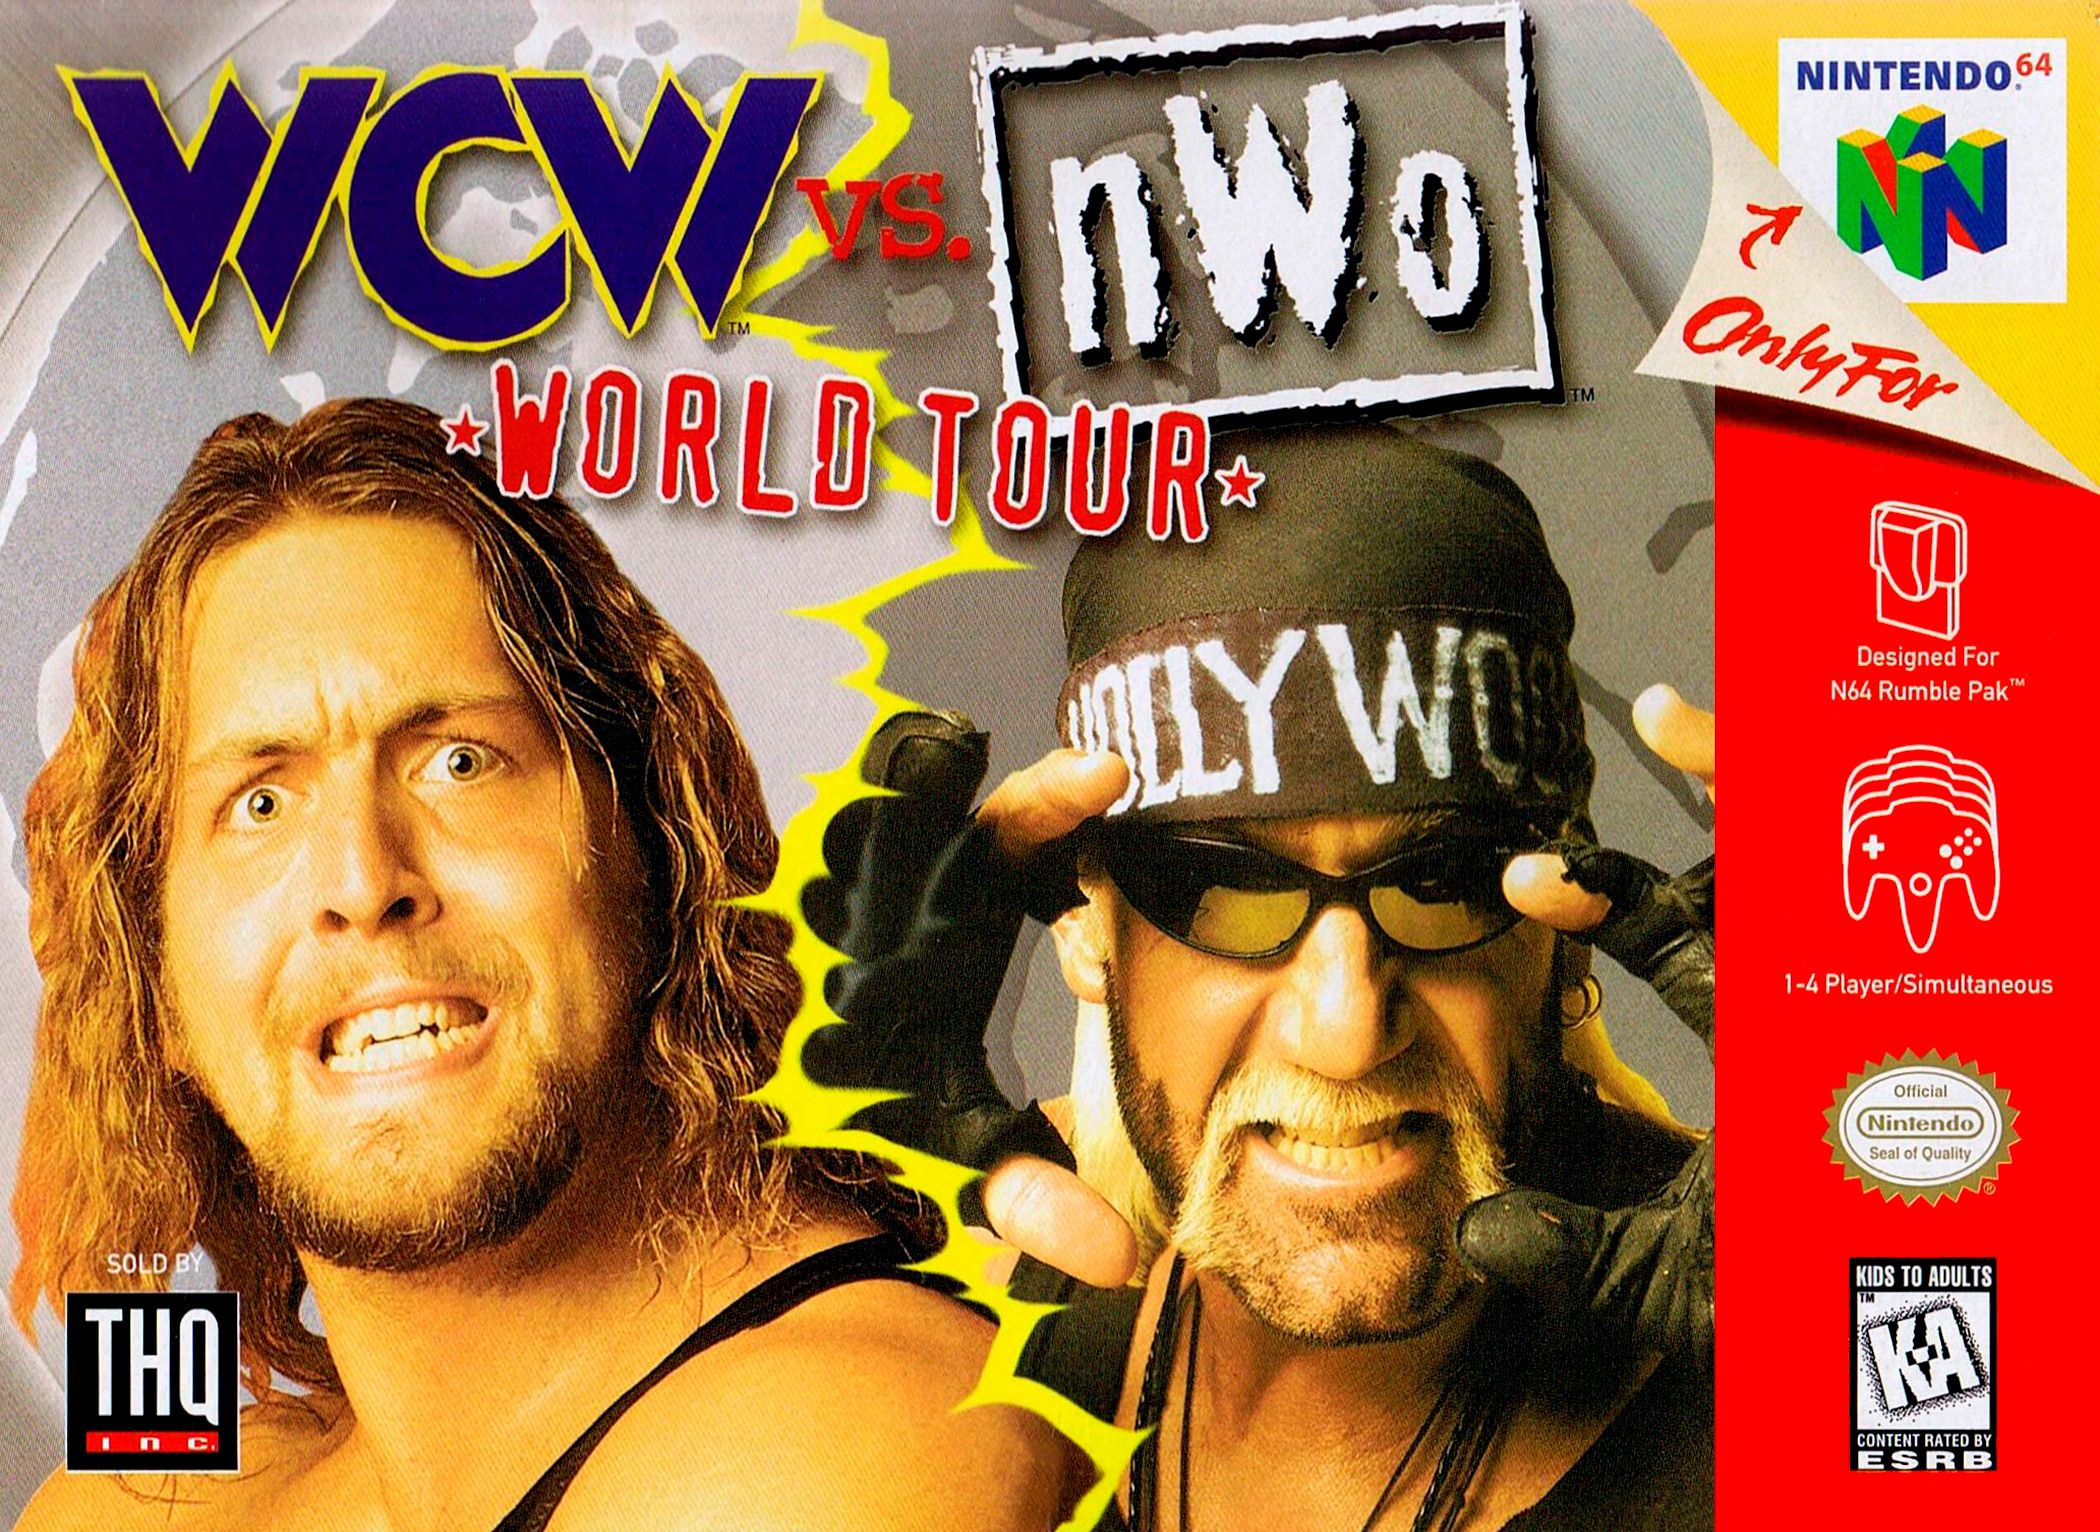 WCW vs NWO World Tour cover image